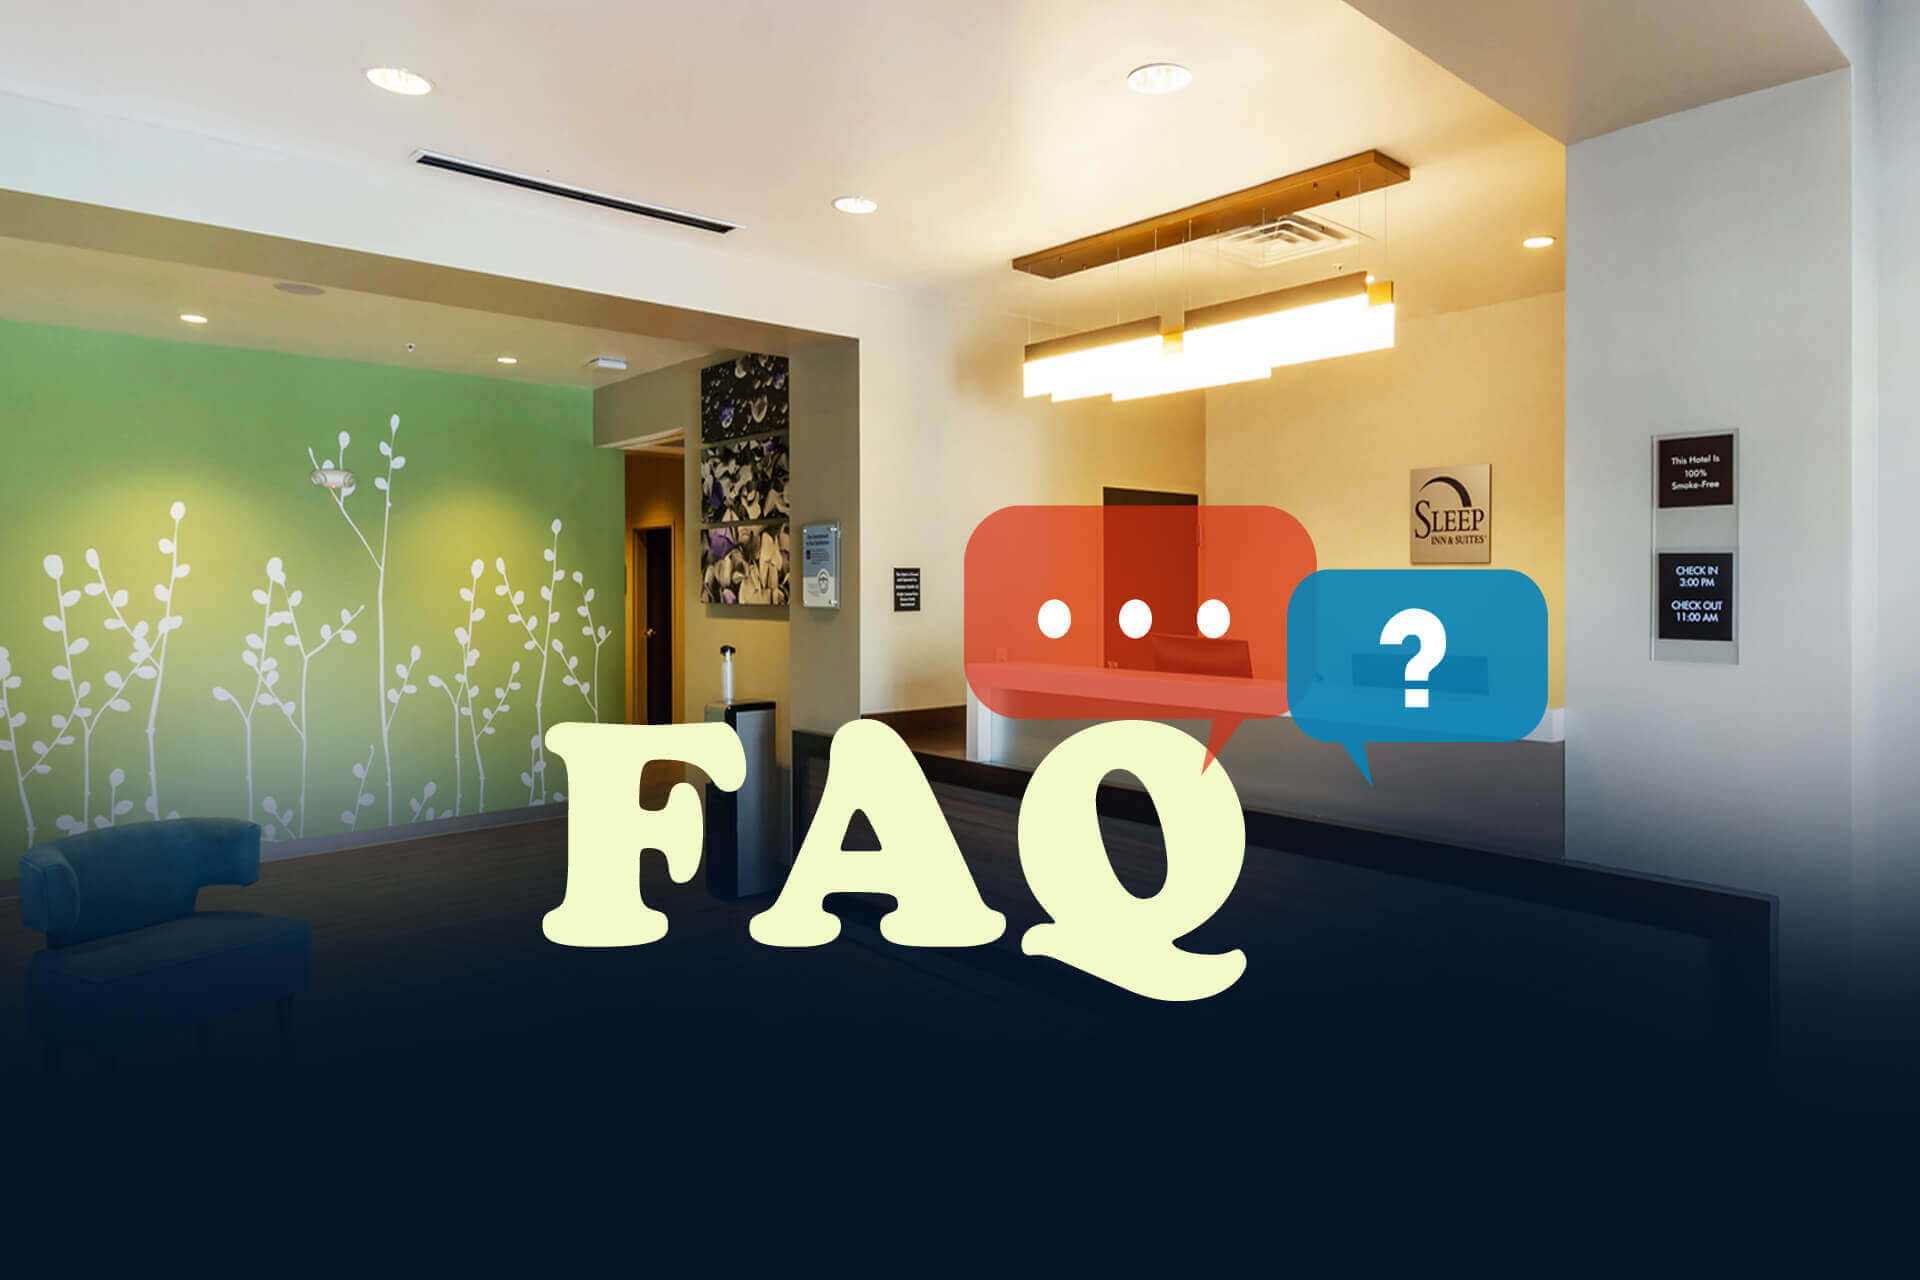 Hotel FAQ